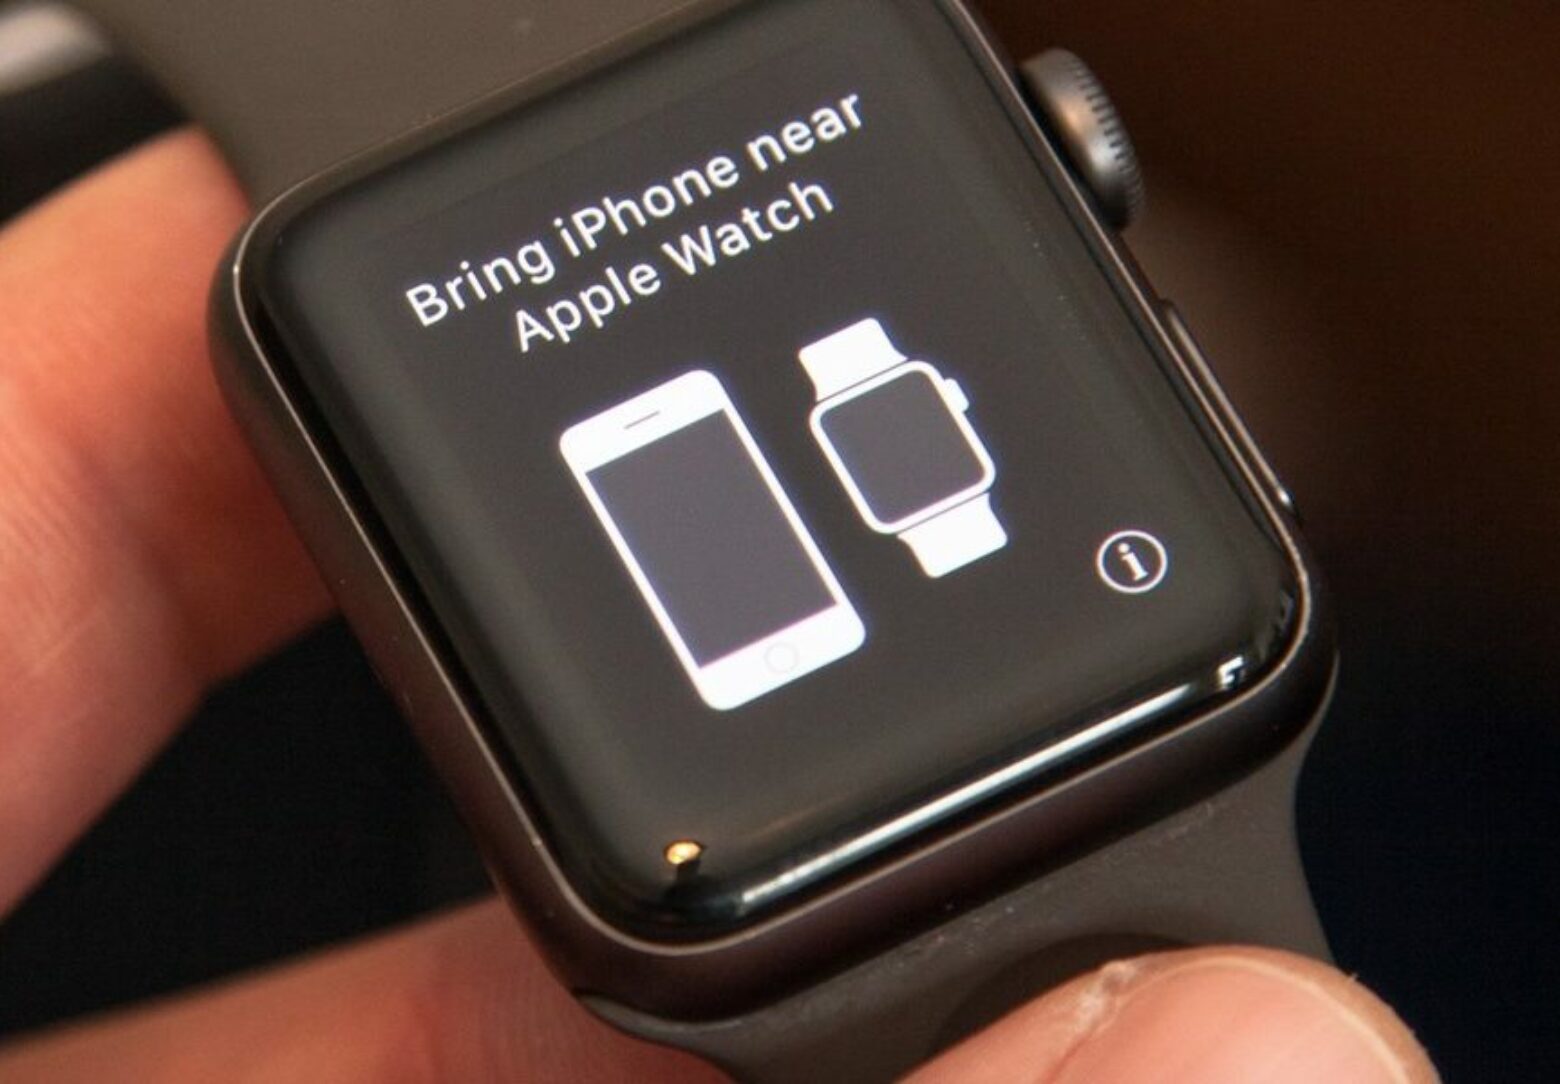 iphone near apple watch